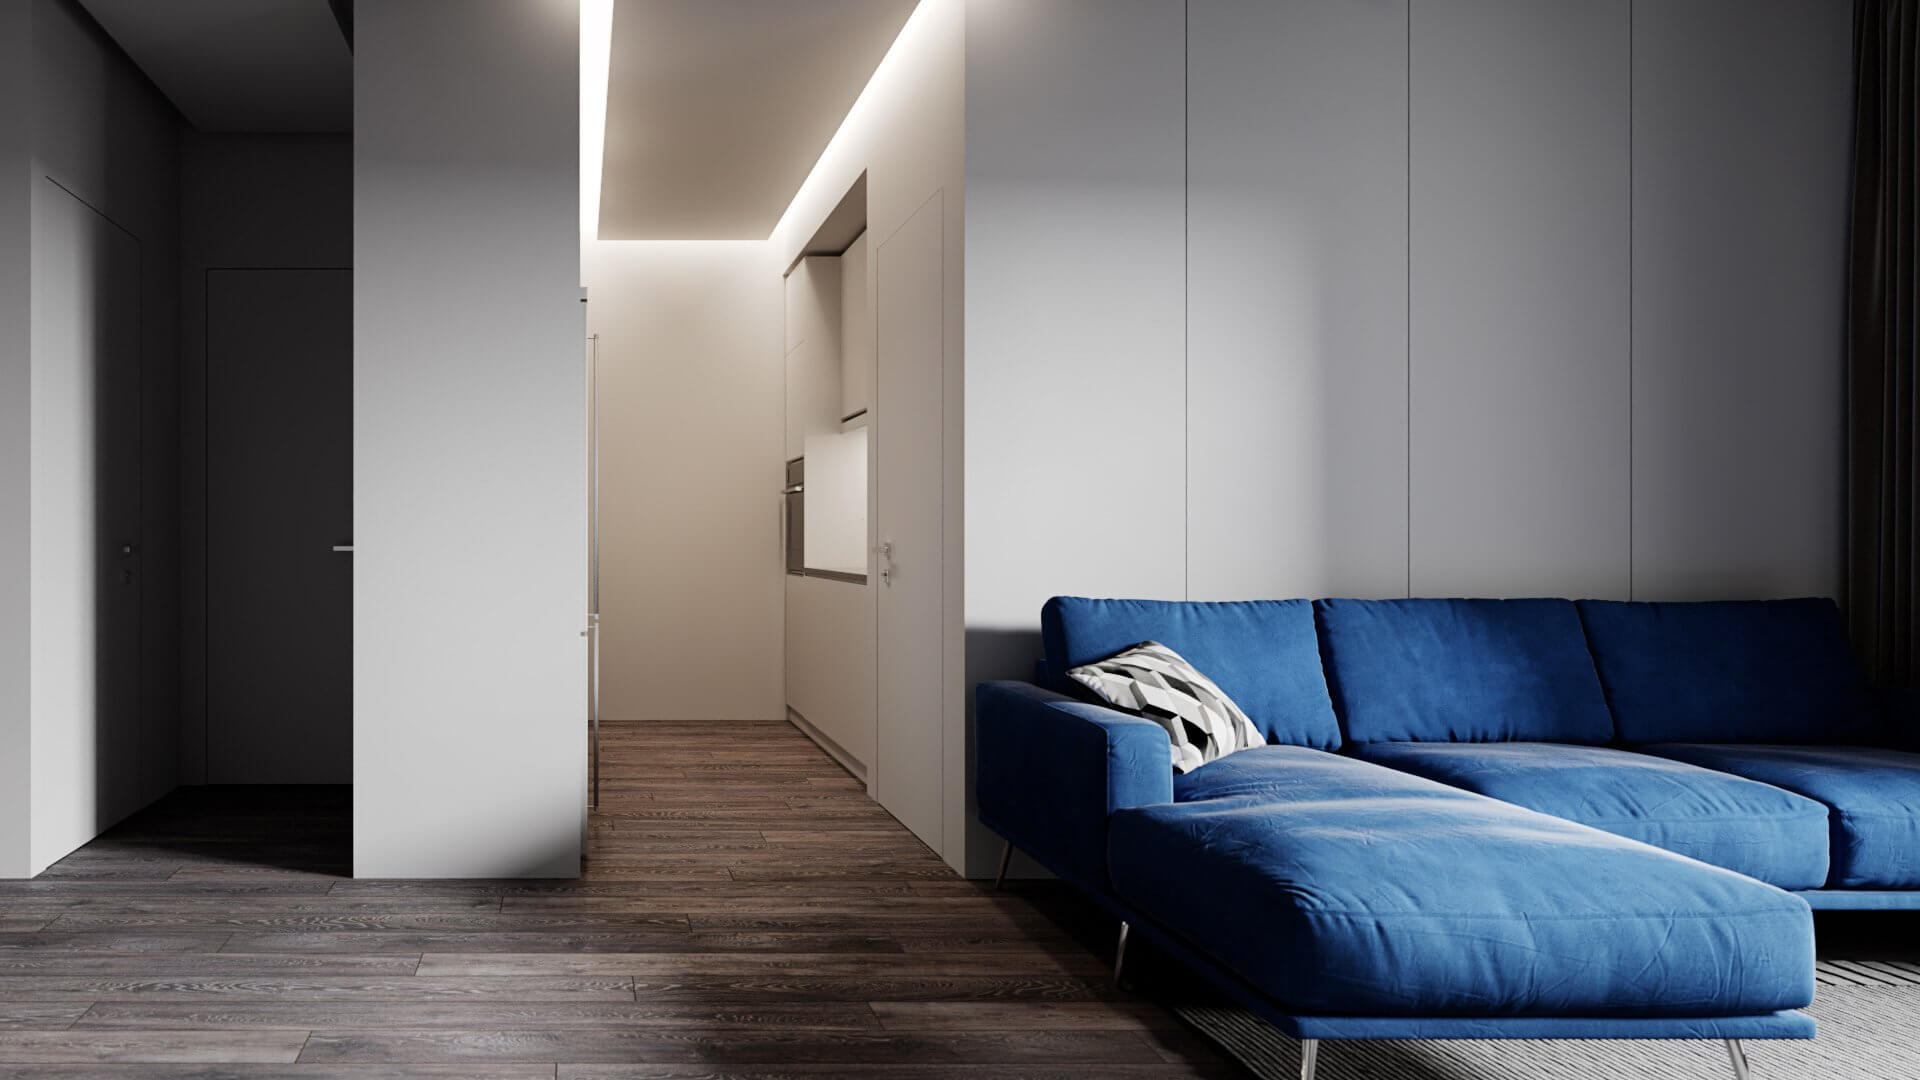 Classic and clean apartment living room corridor - cgi visualization